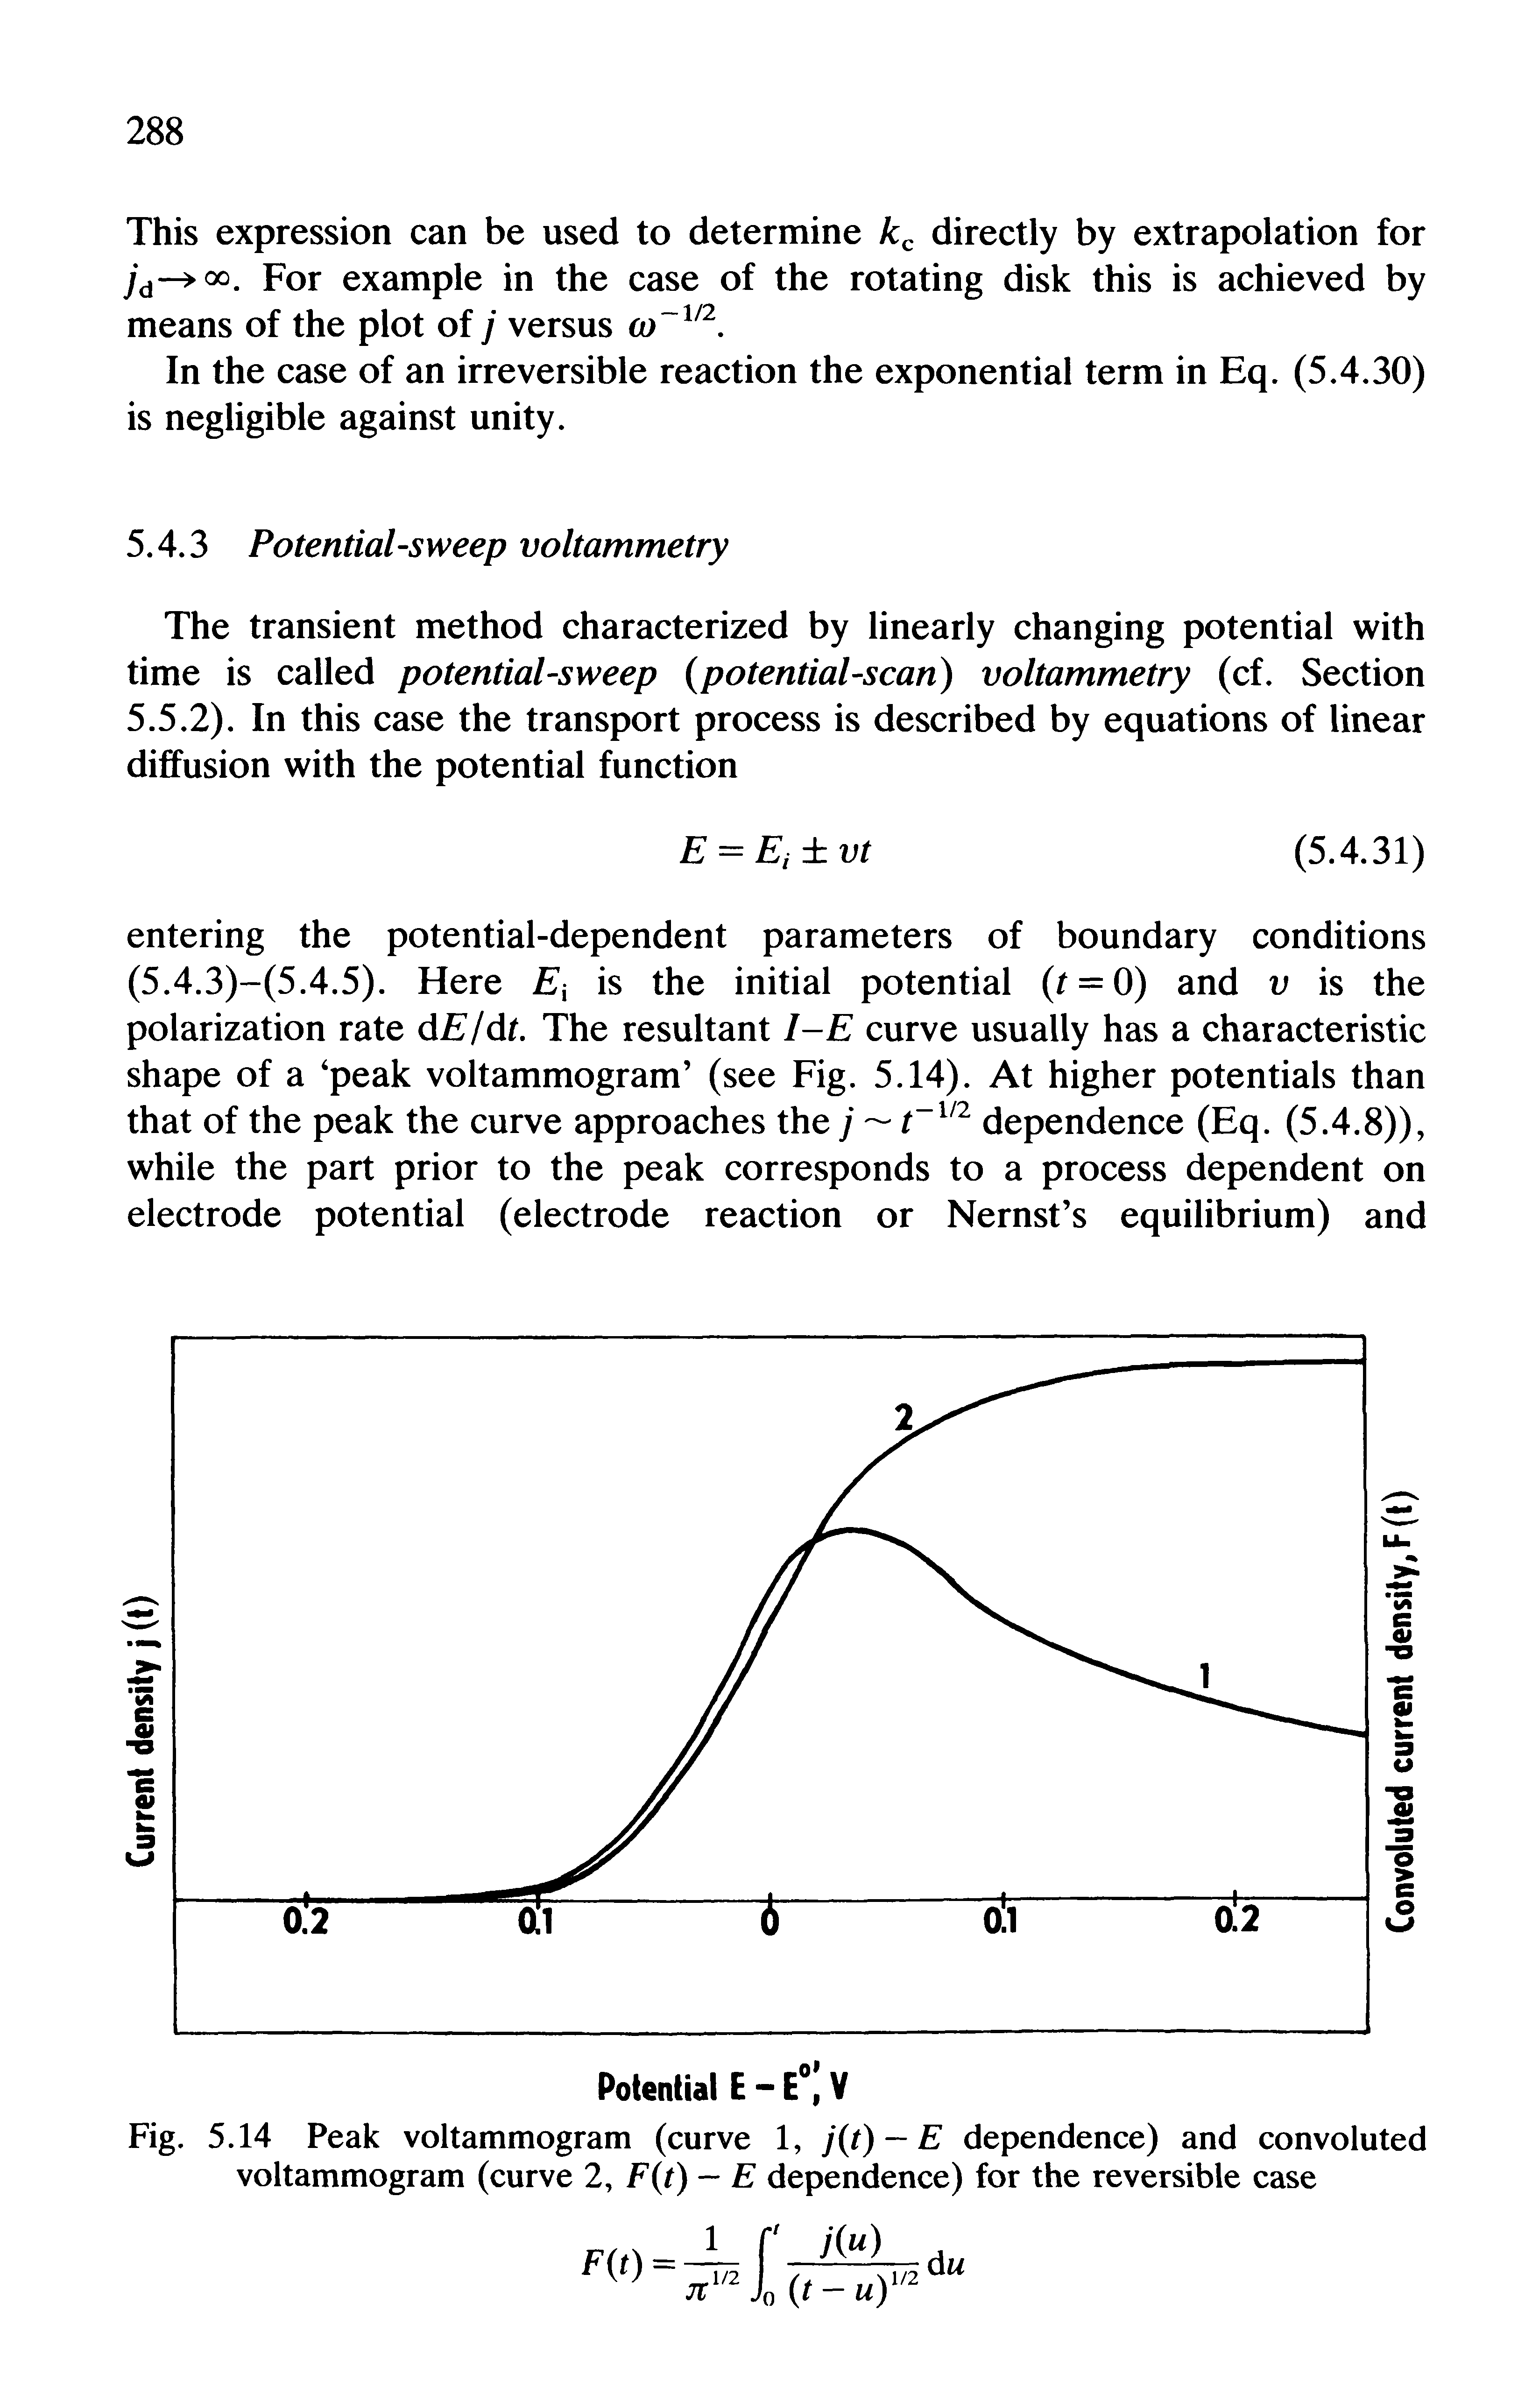 Fig. 5.14 Peak voltammogram (curve 1, j t) — E dependence) and convoluted voltammogram (curve 2, F(t) — E dependence) for the reversible case...